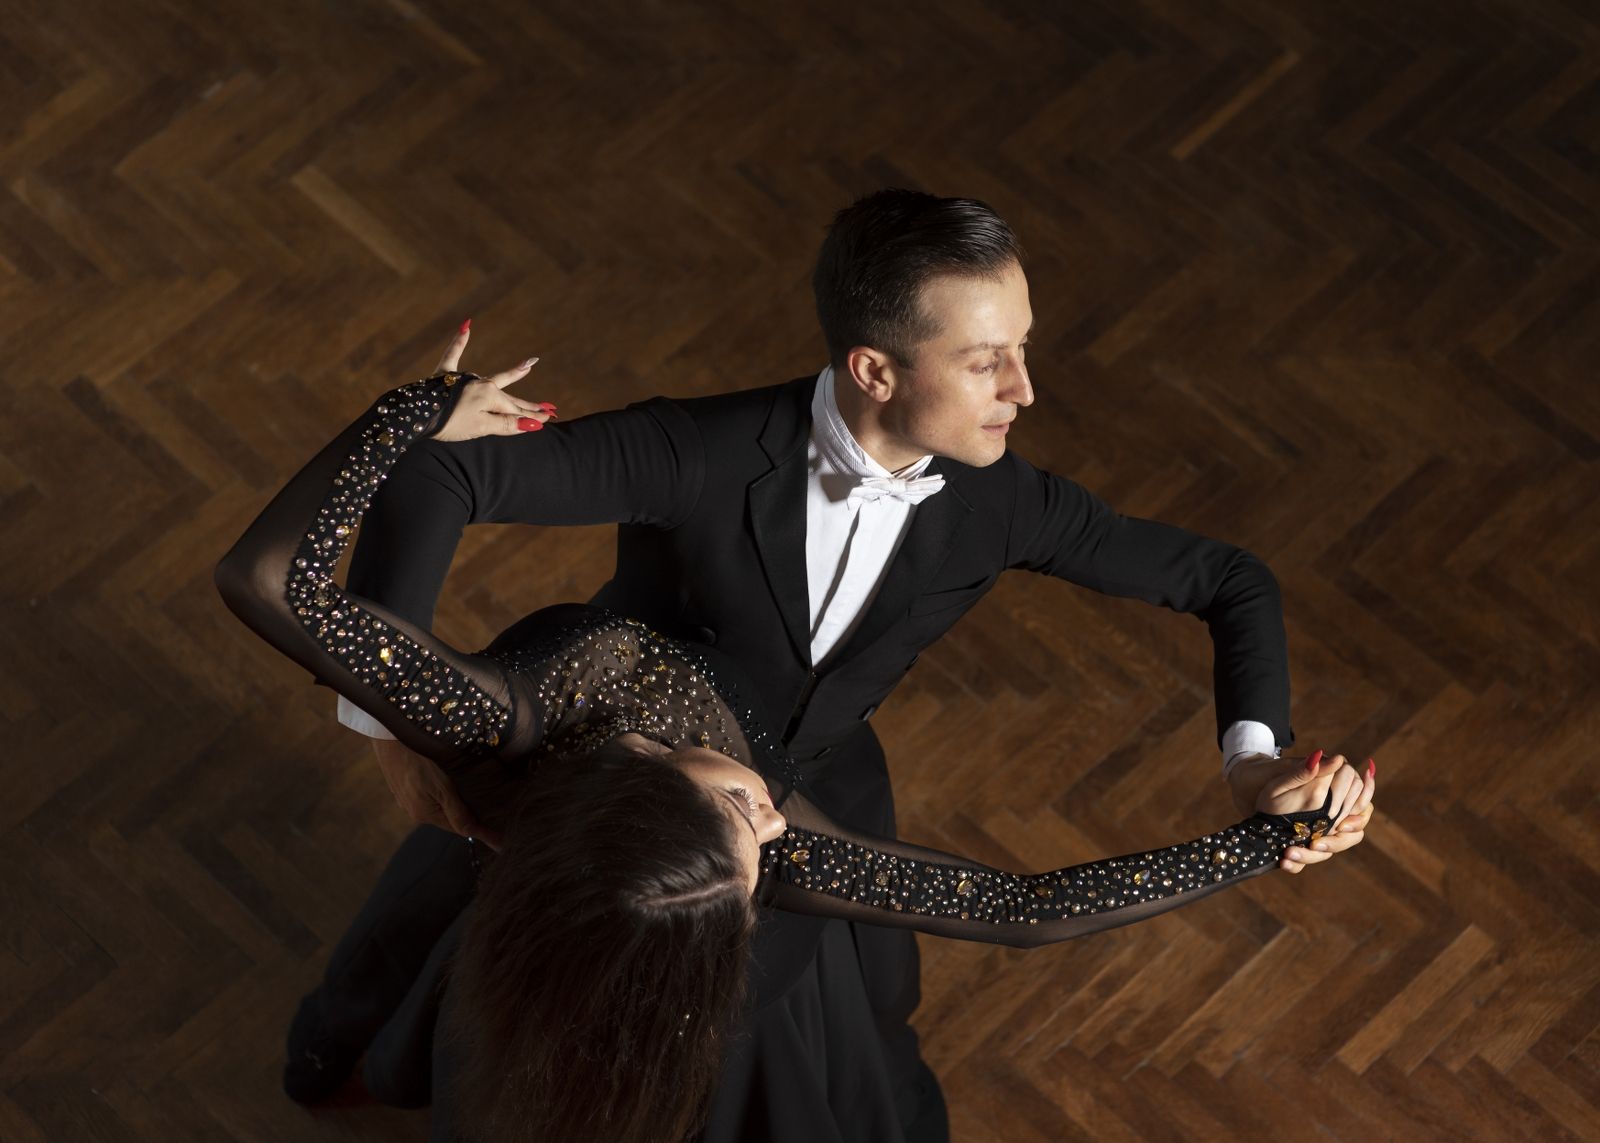 man-woman-dancing-together-ballroom-scene_1600x1143.jpg